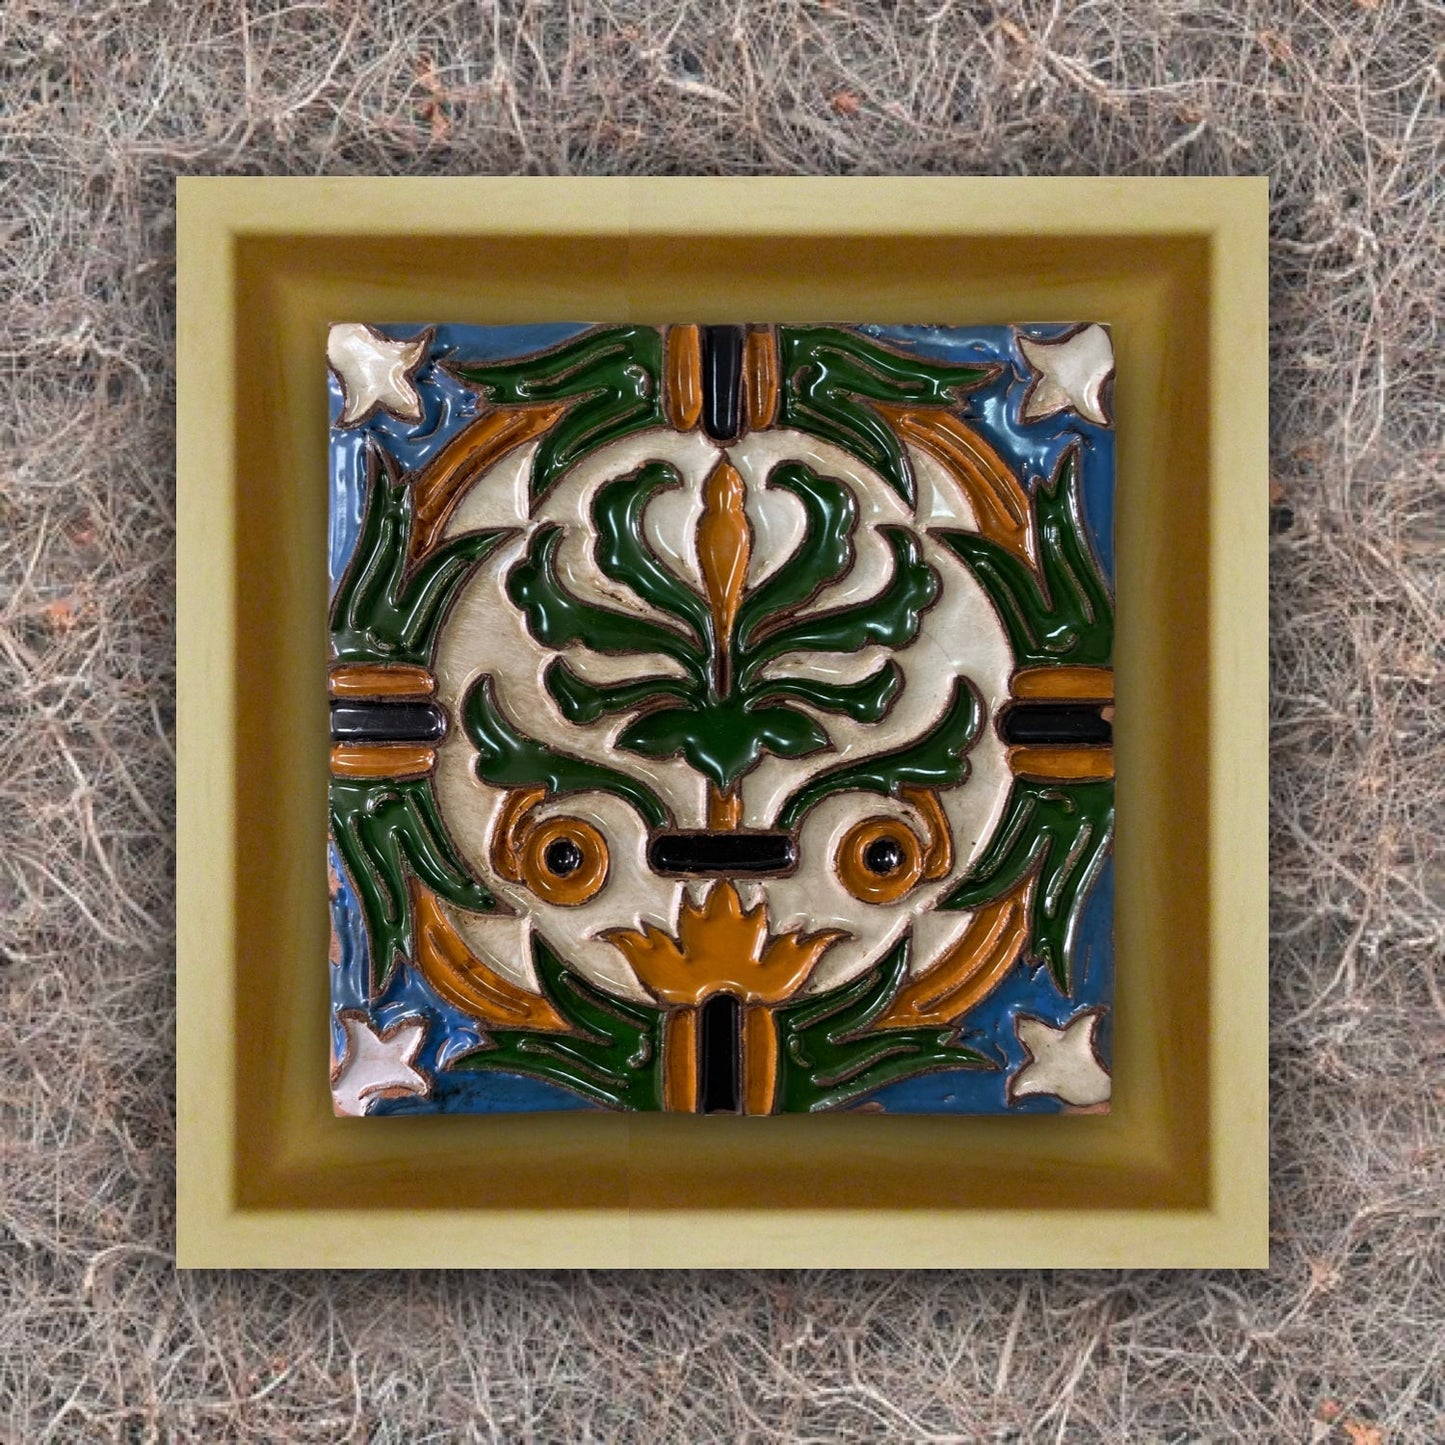 Tile Renaissance Edge Palm Tree Natural Frame REF3.3